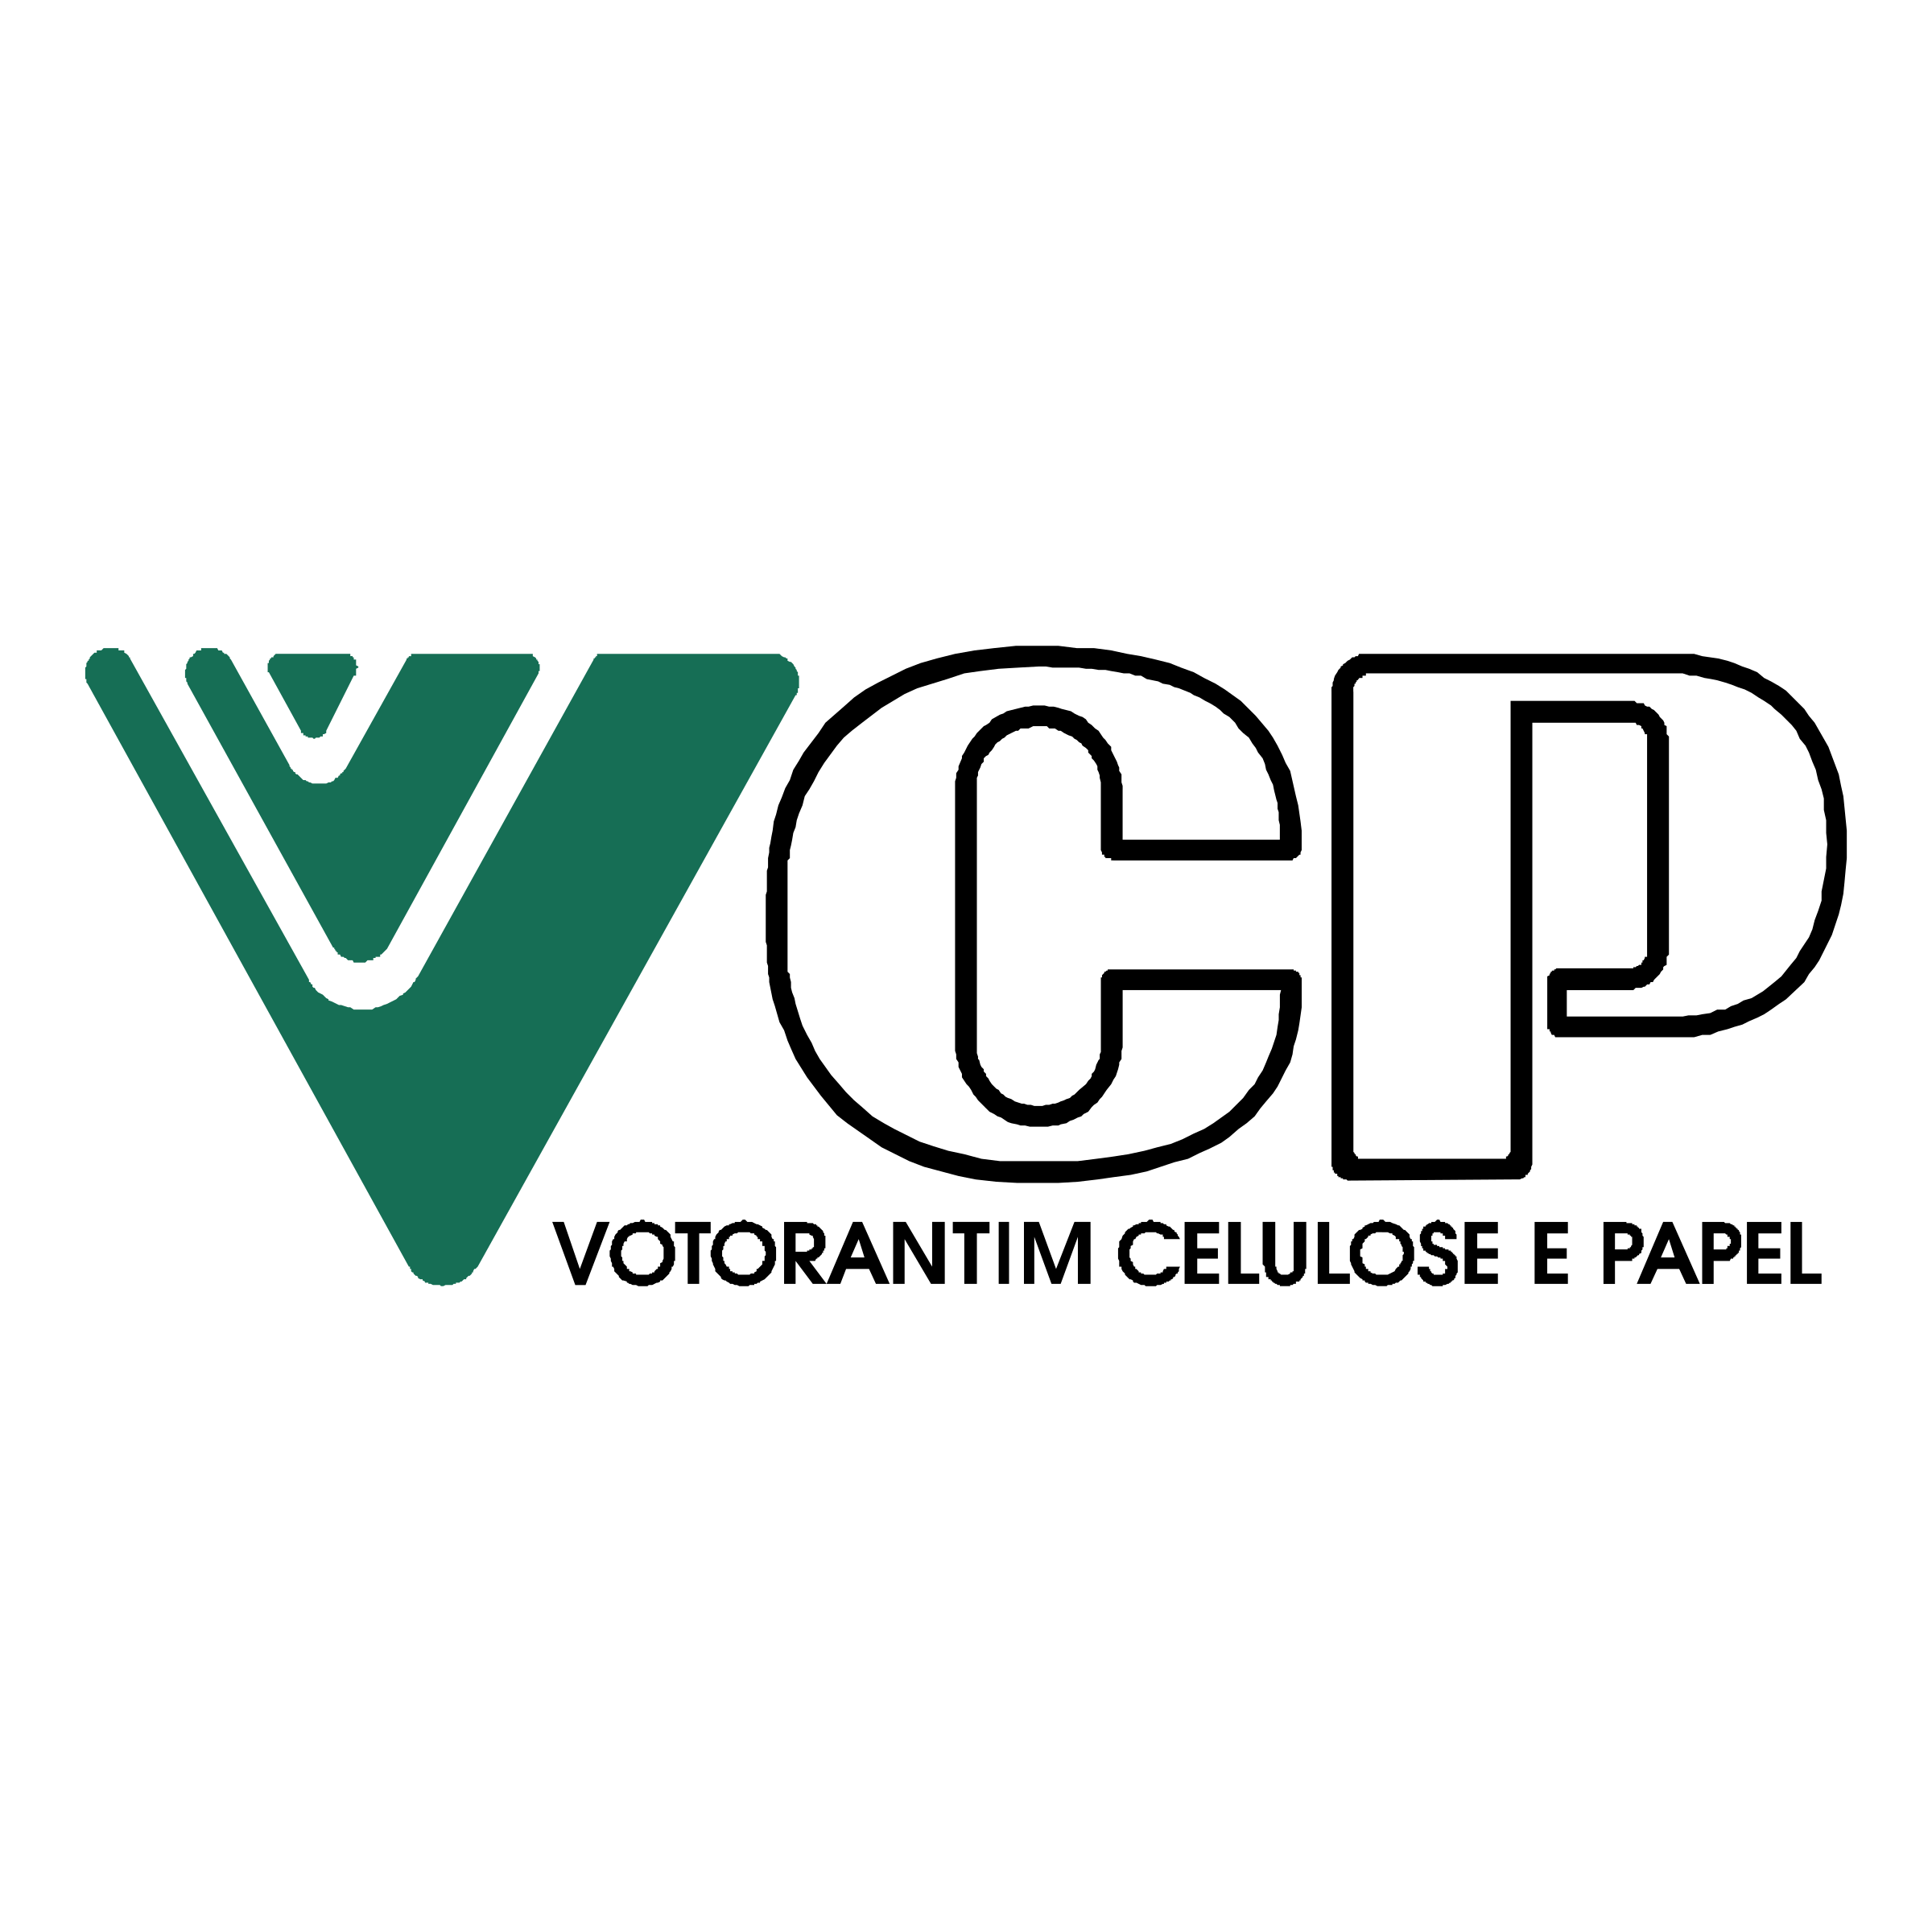 VCP Logo - VCP Logo PNG Transparent & SVG Vector - Freebie Supply